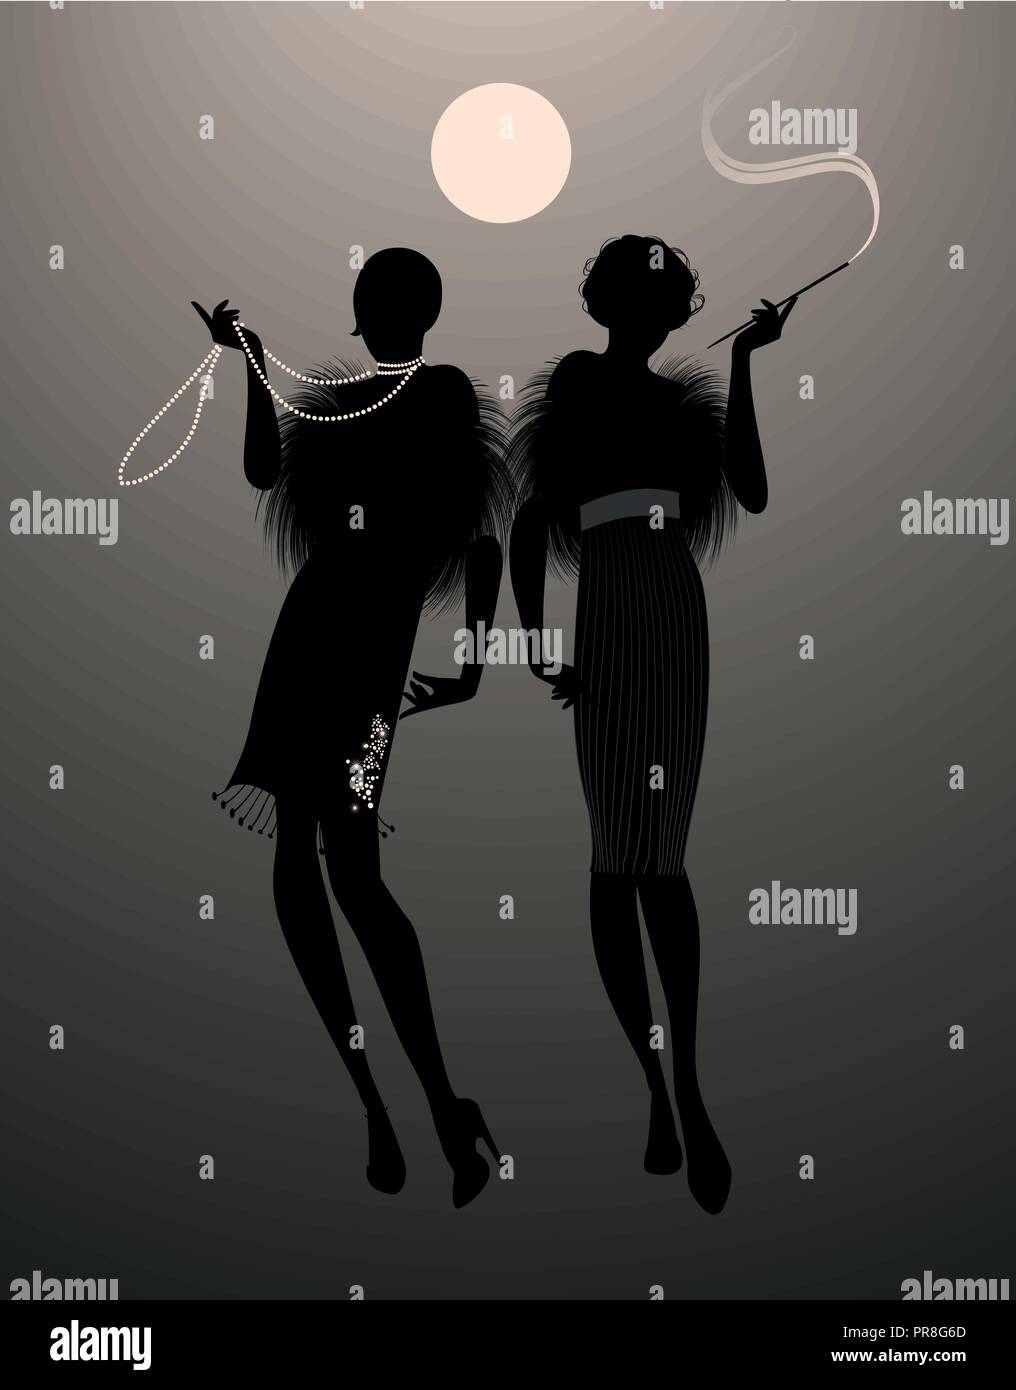 Zwei elegante Flapper Girl Silhouetten unter dem Mond Stock Vektor